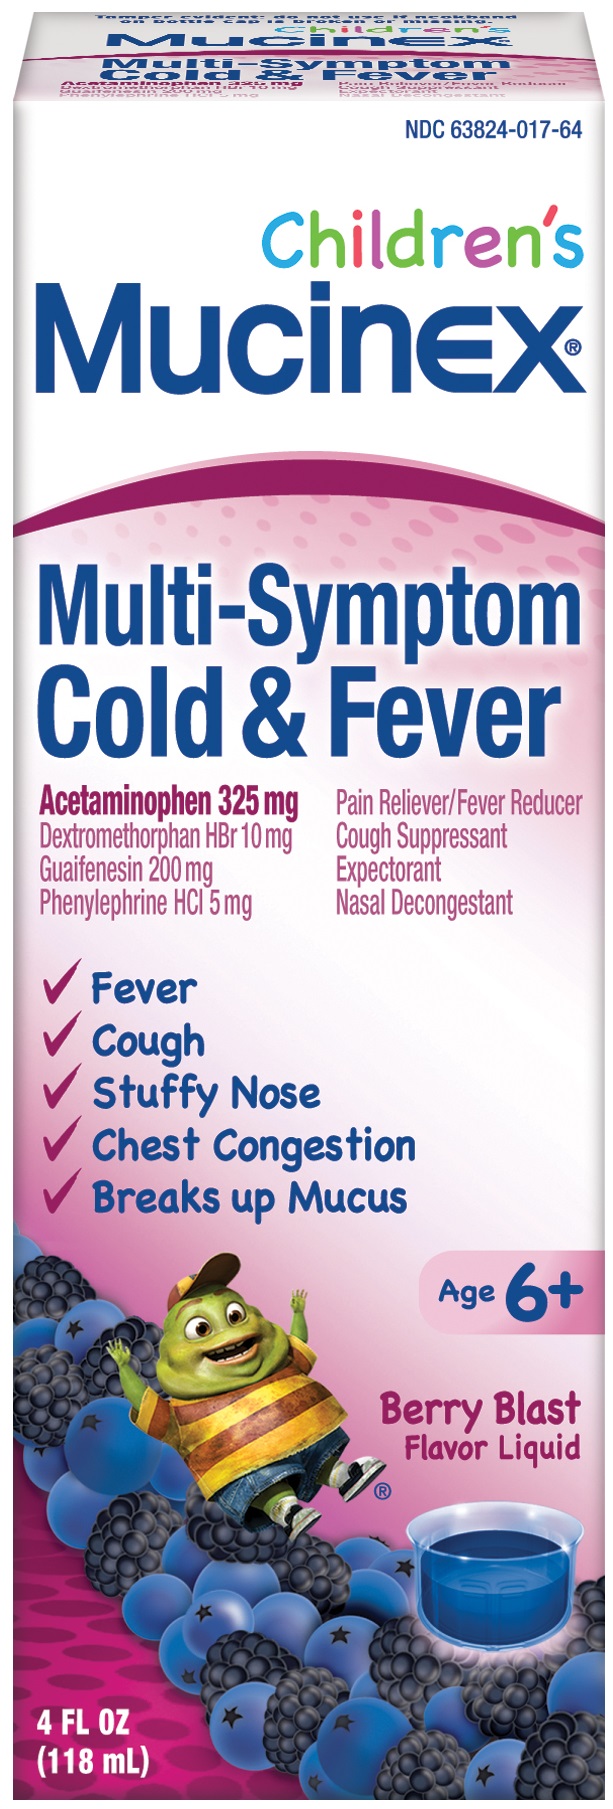 MUCINEX® Children's Multi-Symptom Cough, Cold & Fever - Very Berry